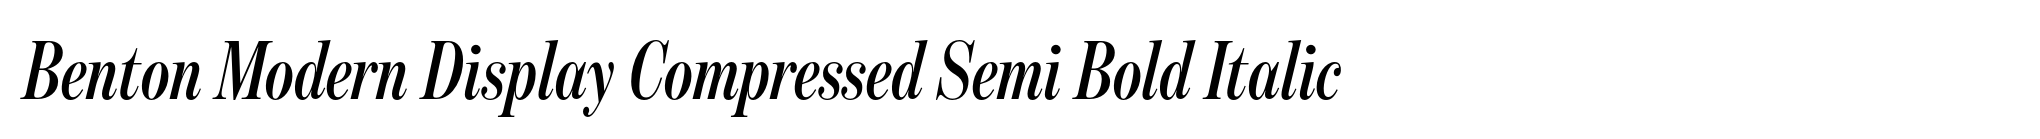 Benton Modern Display Compressed Semi Bold Italic image